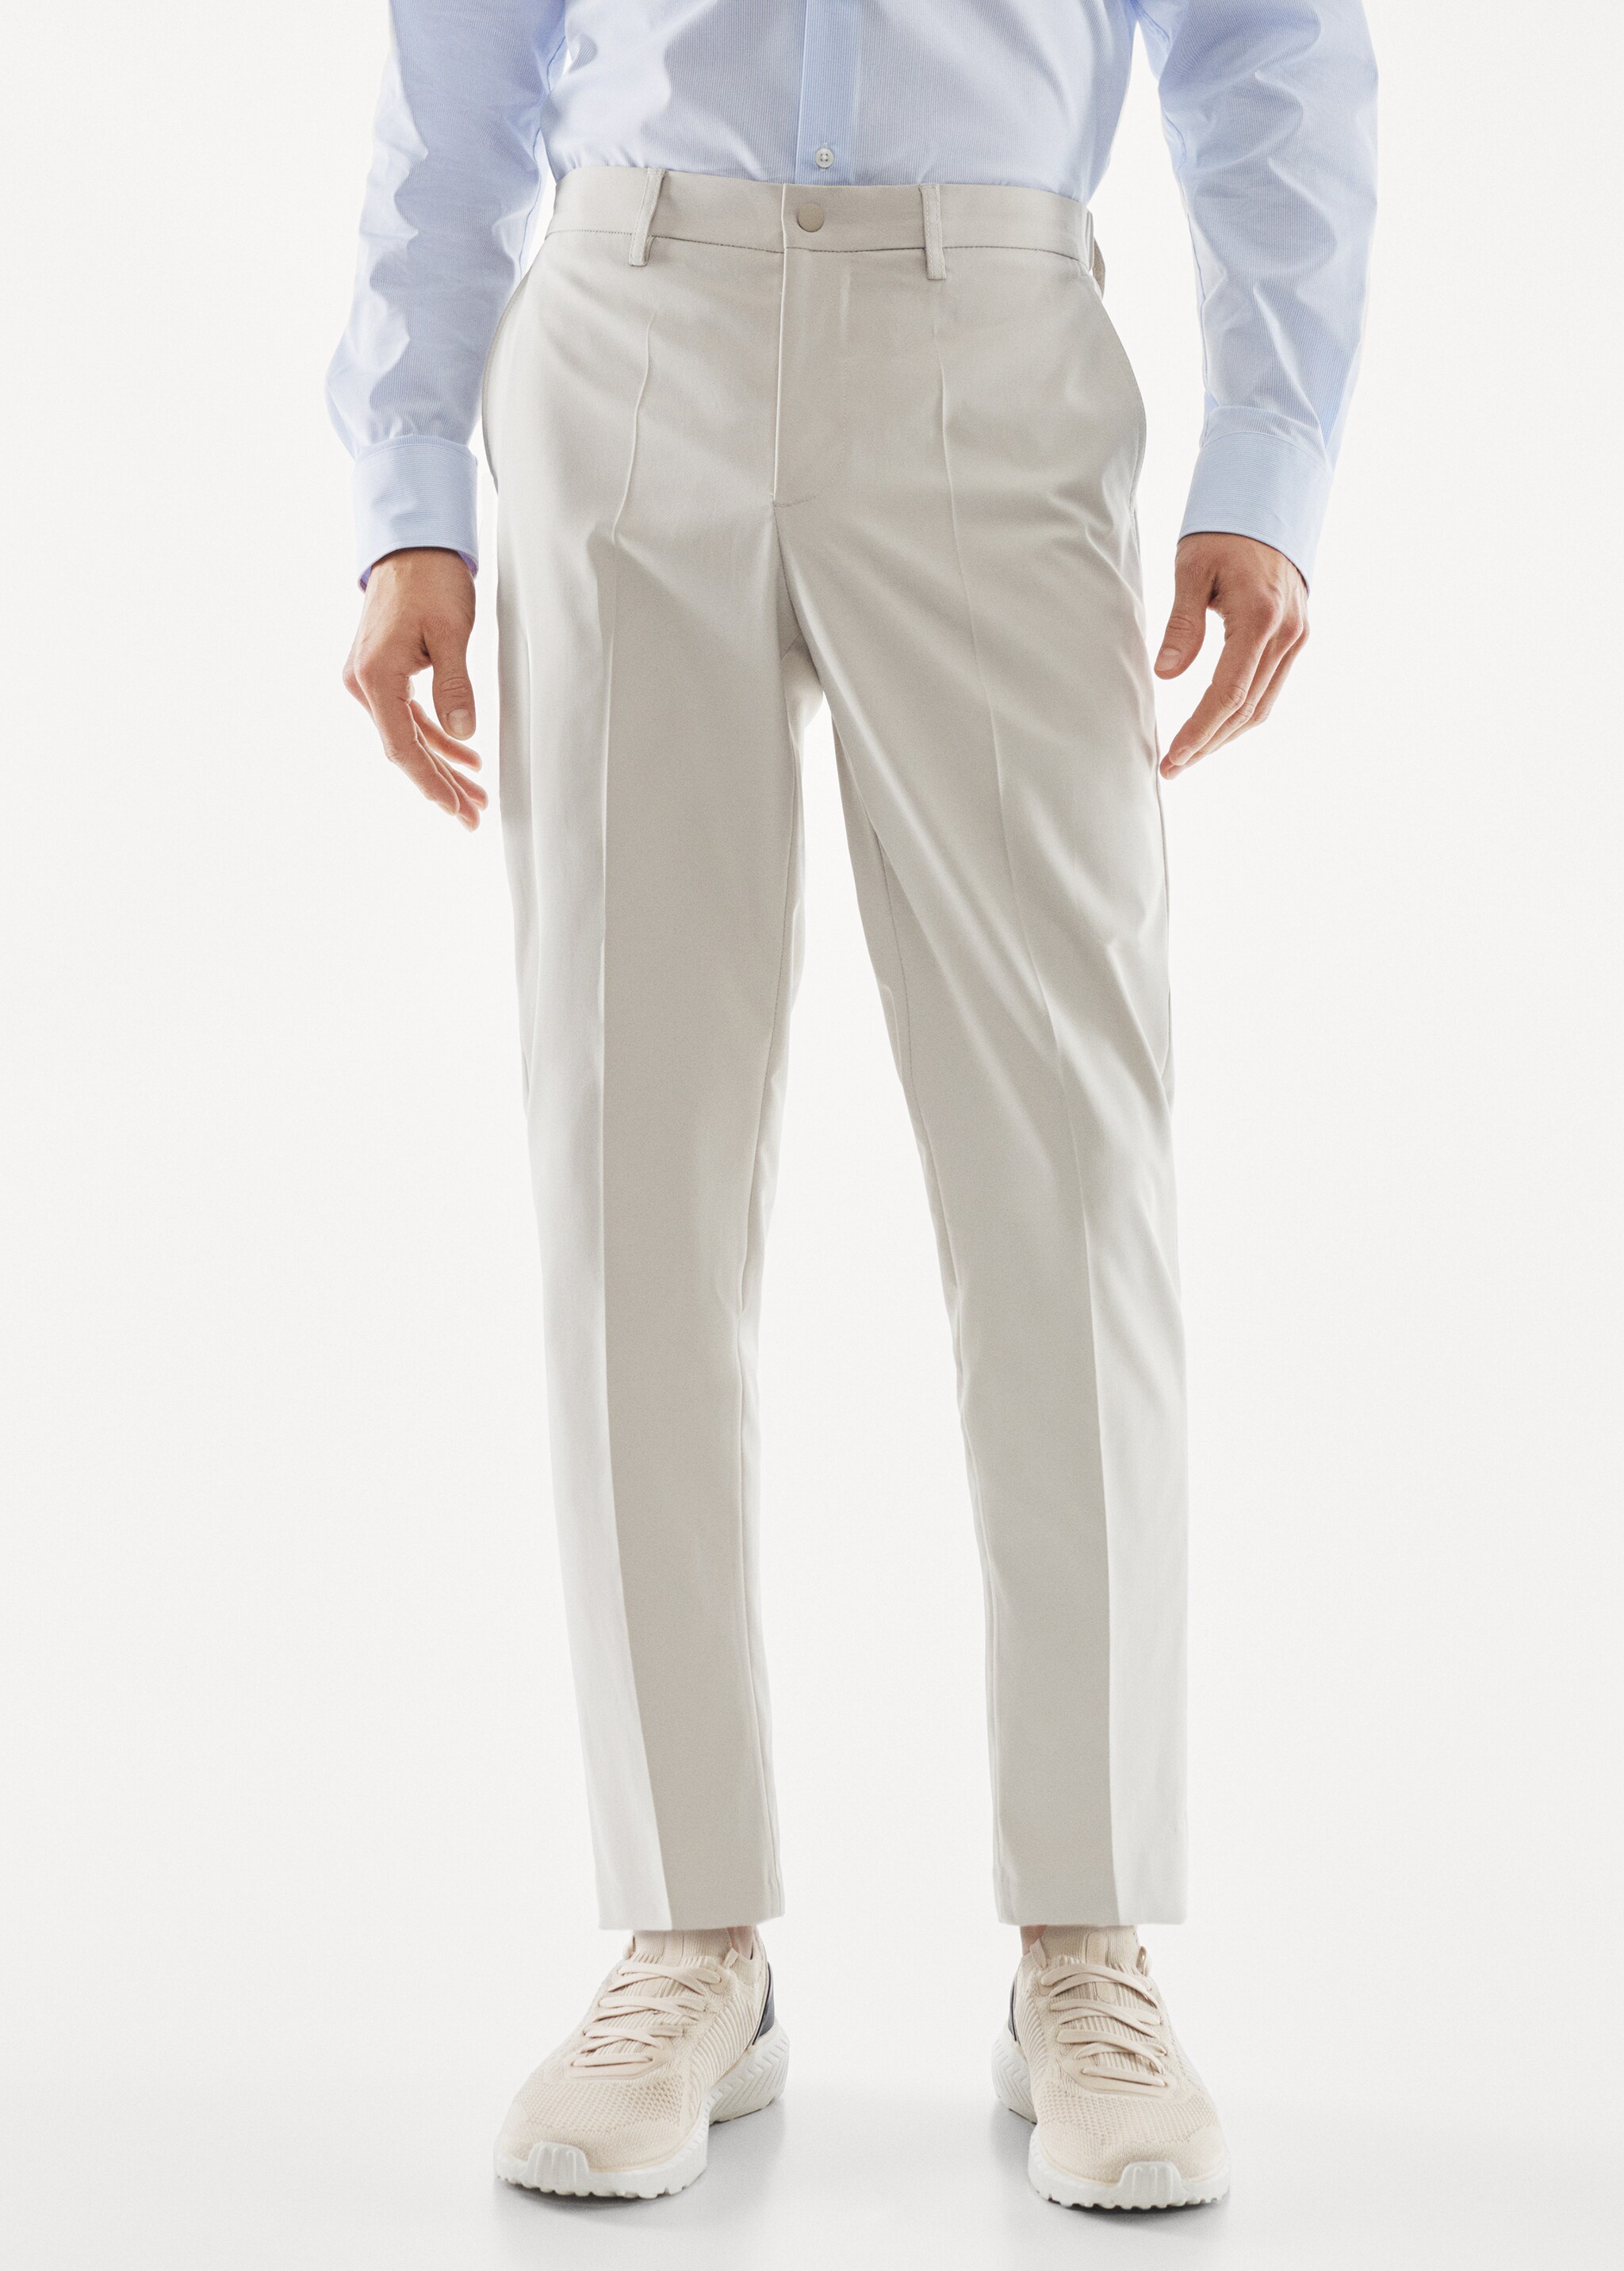 Pantalón traje slim fit tejido técnico - Plano medio